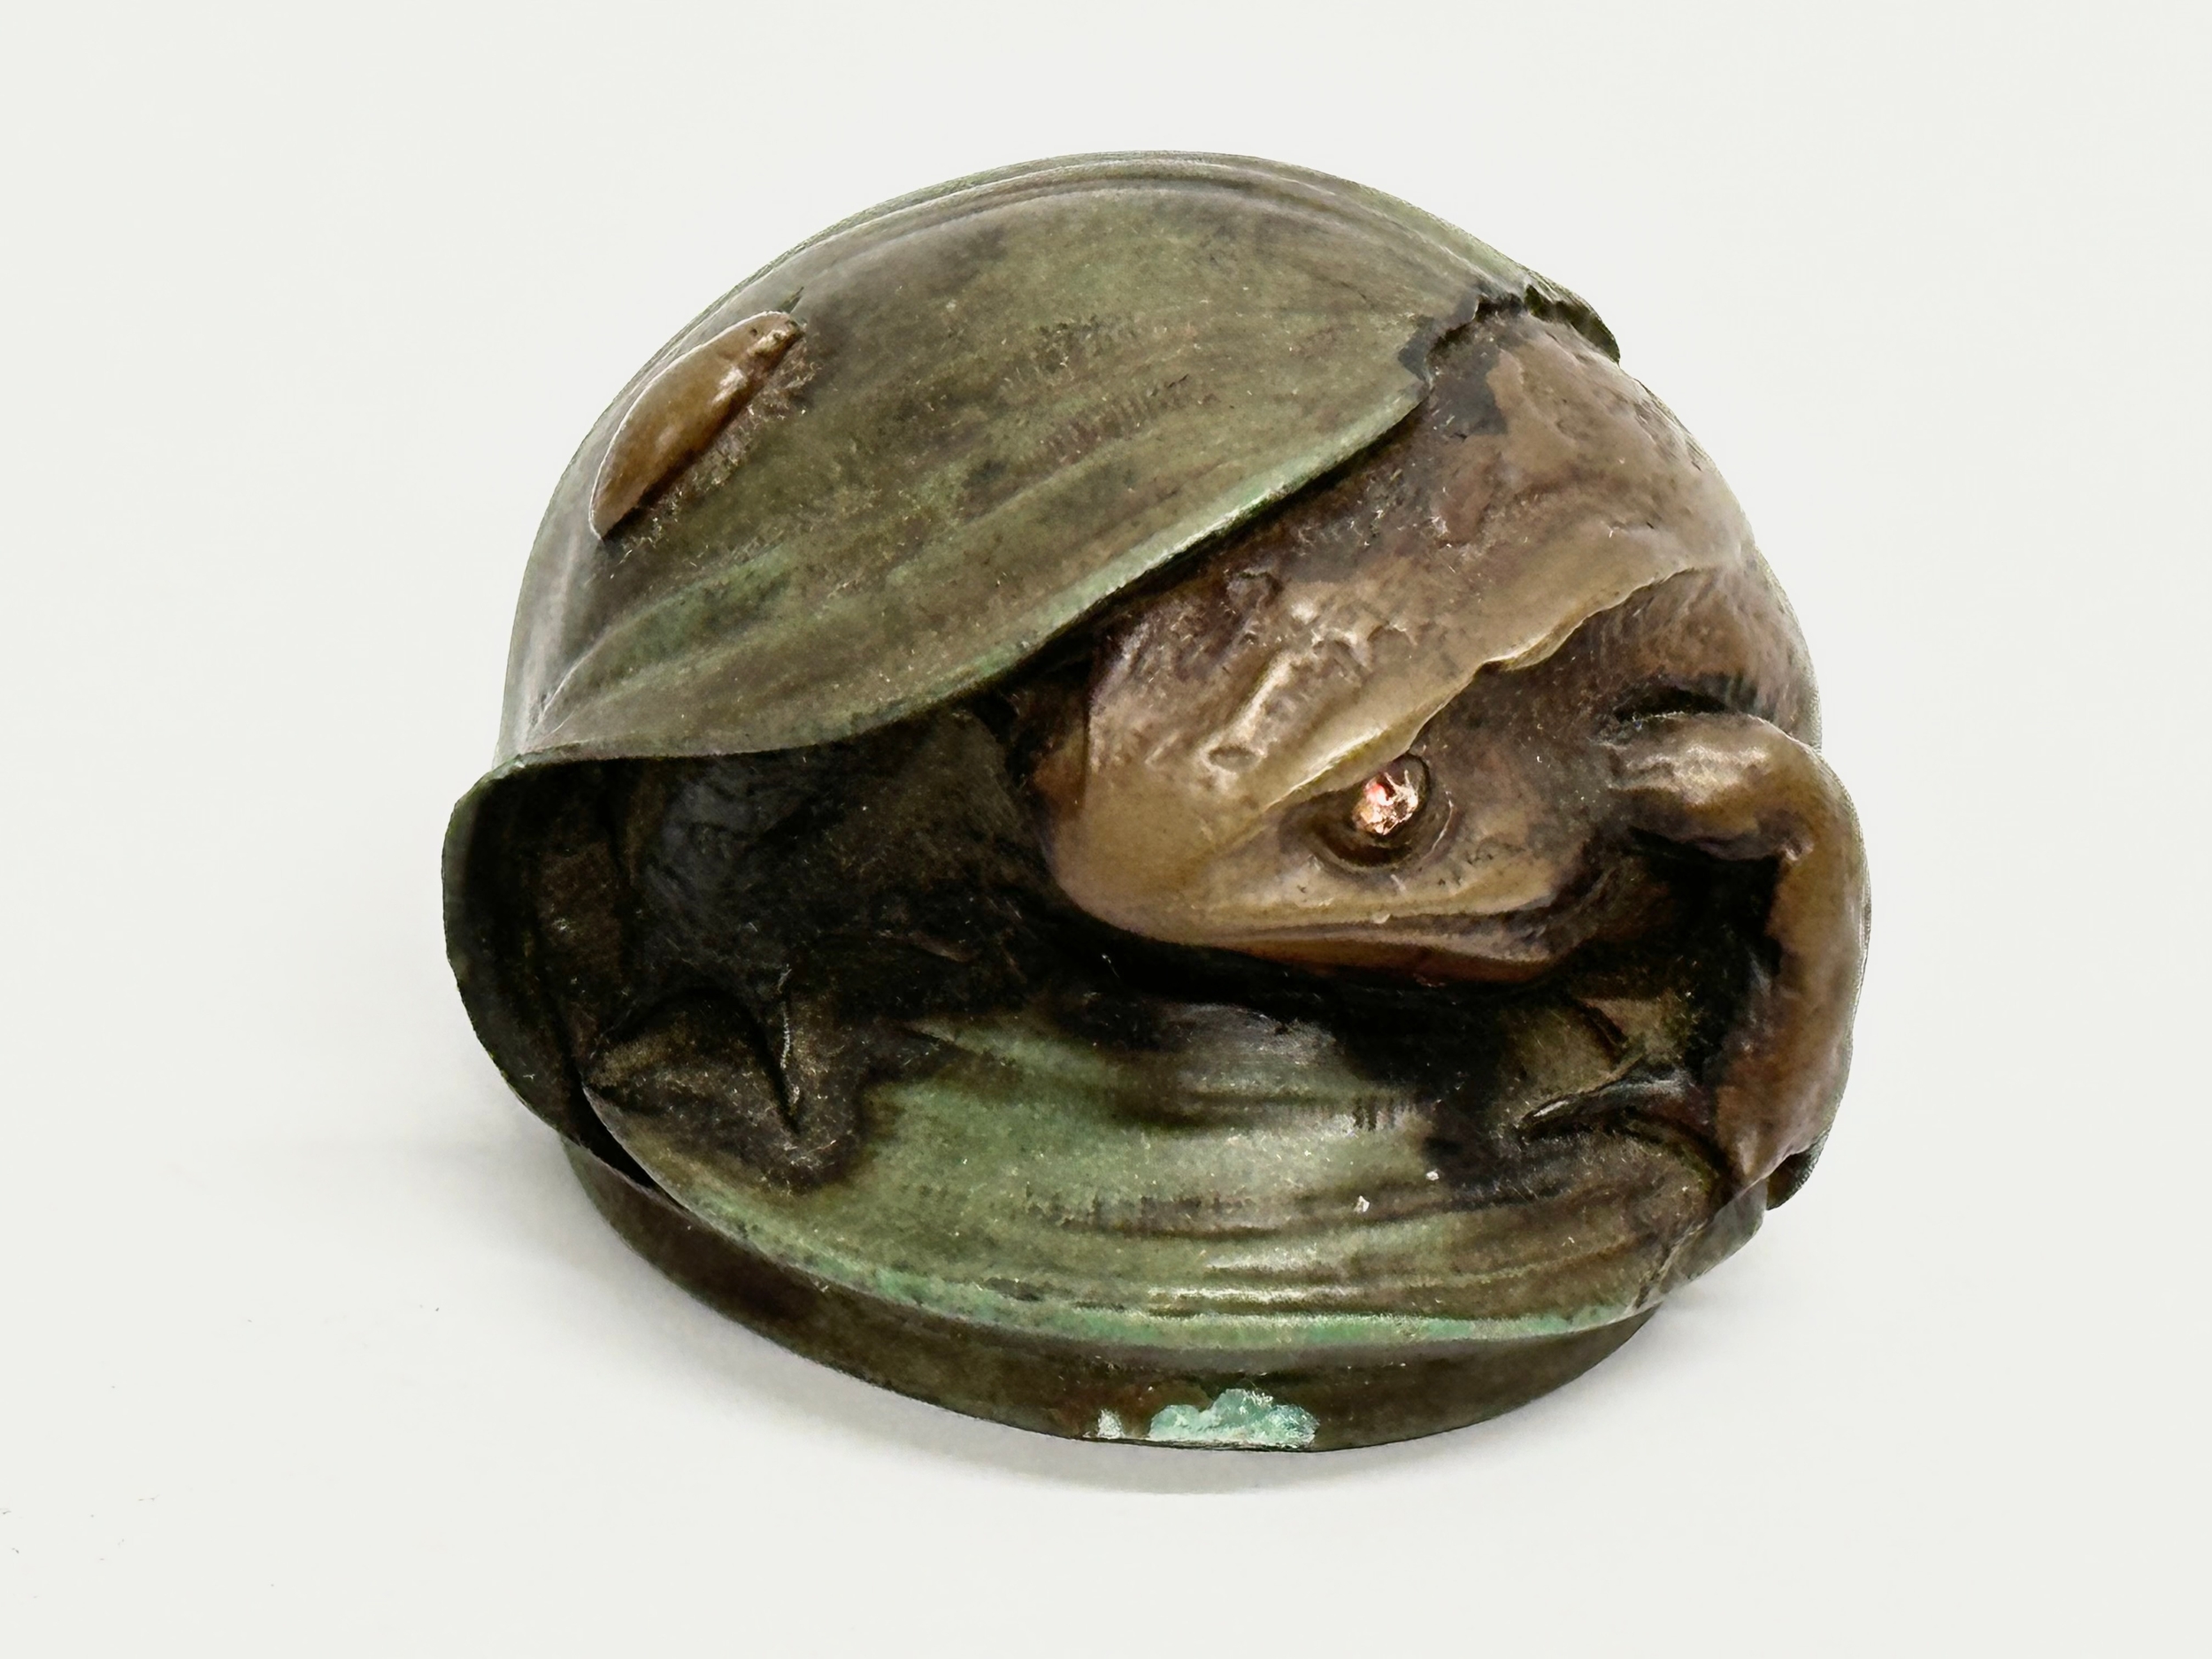 A St Petersburg bronze frog paperweight.